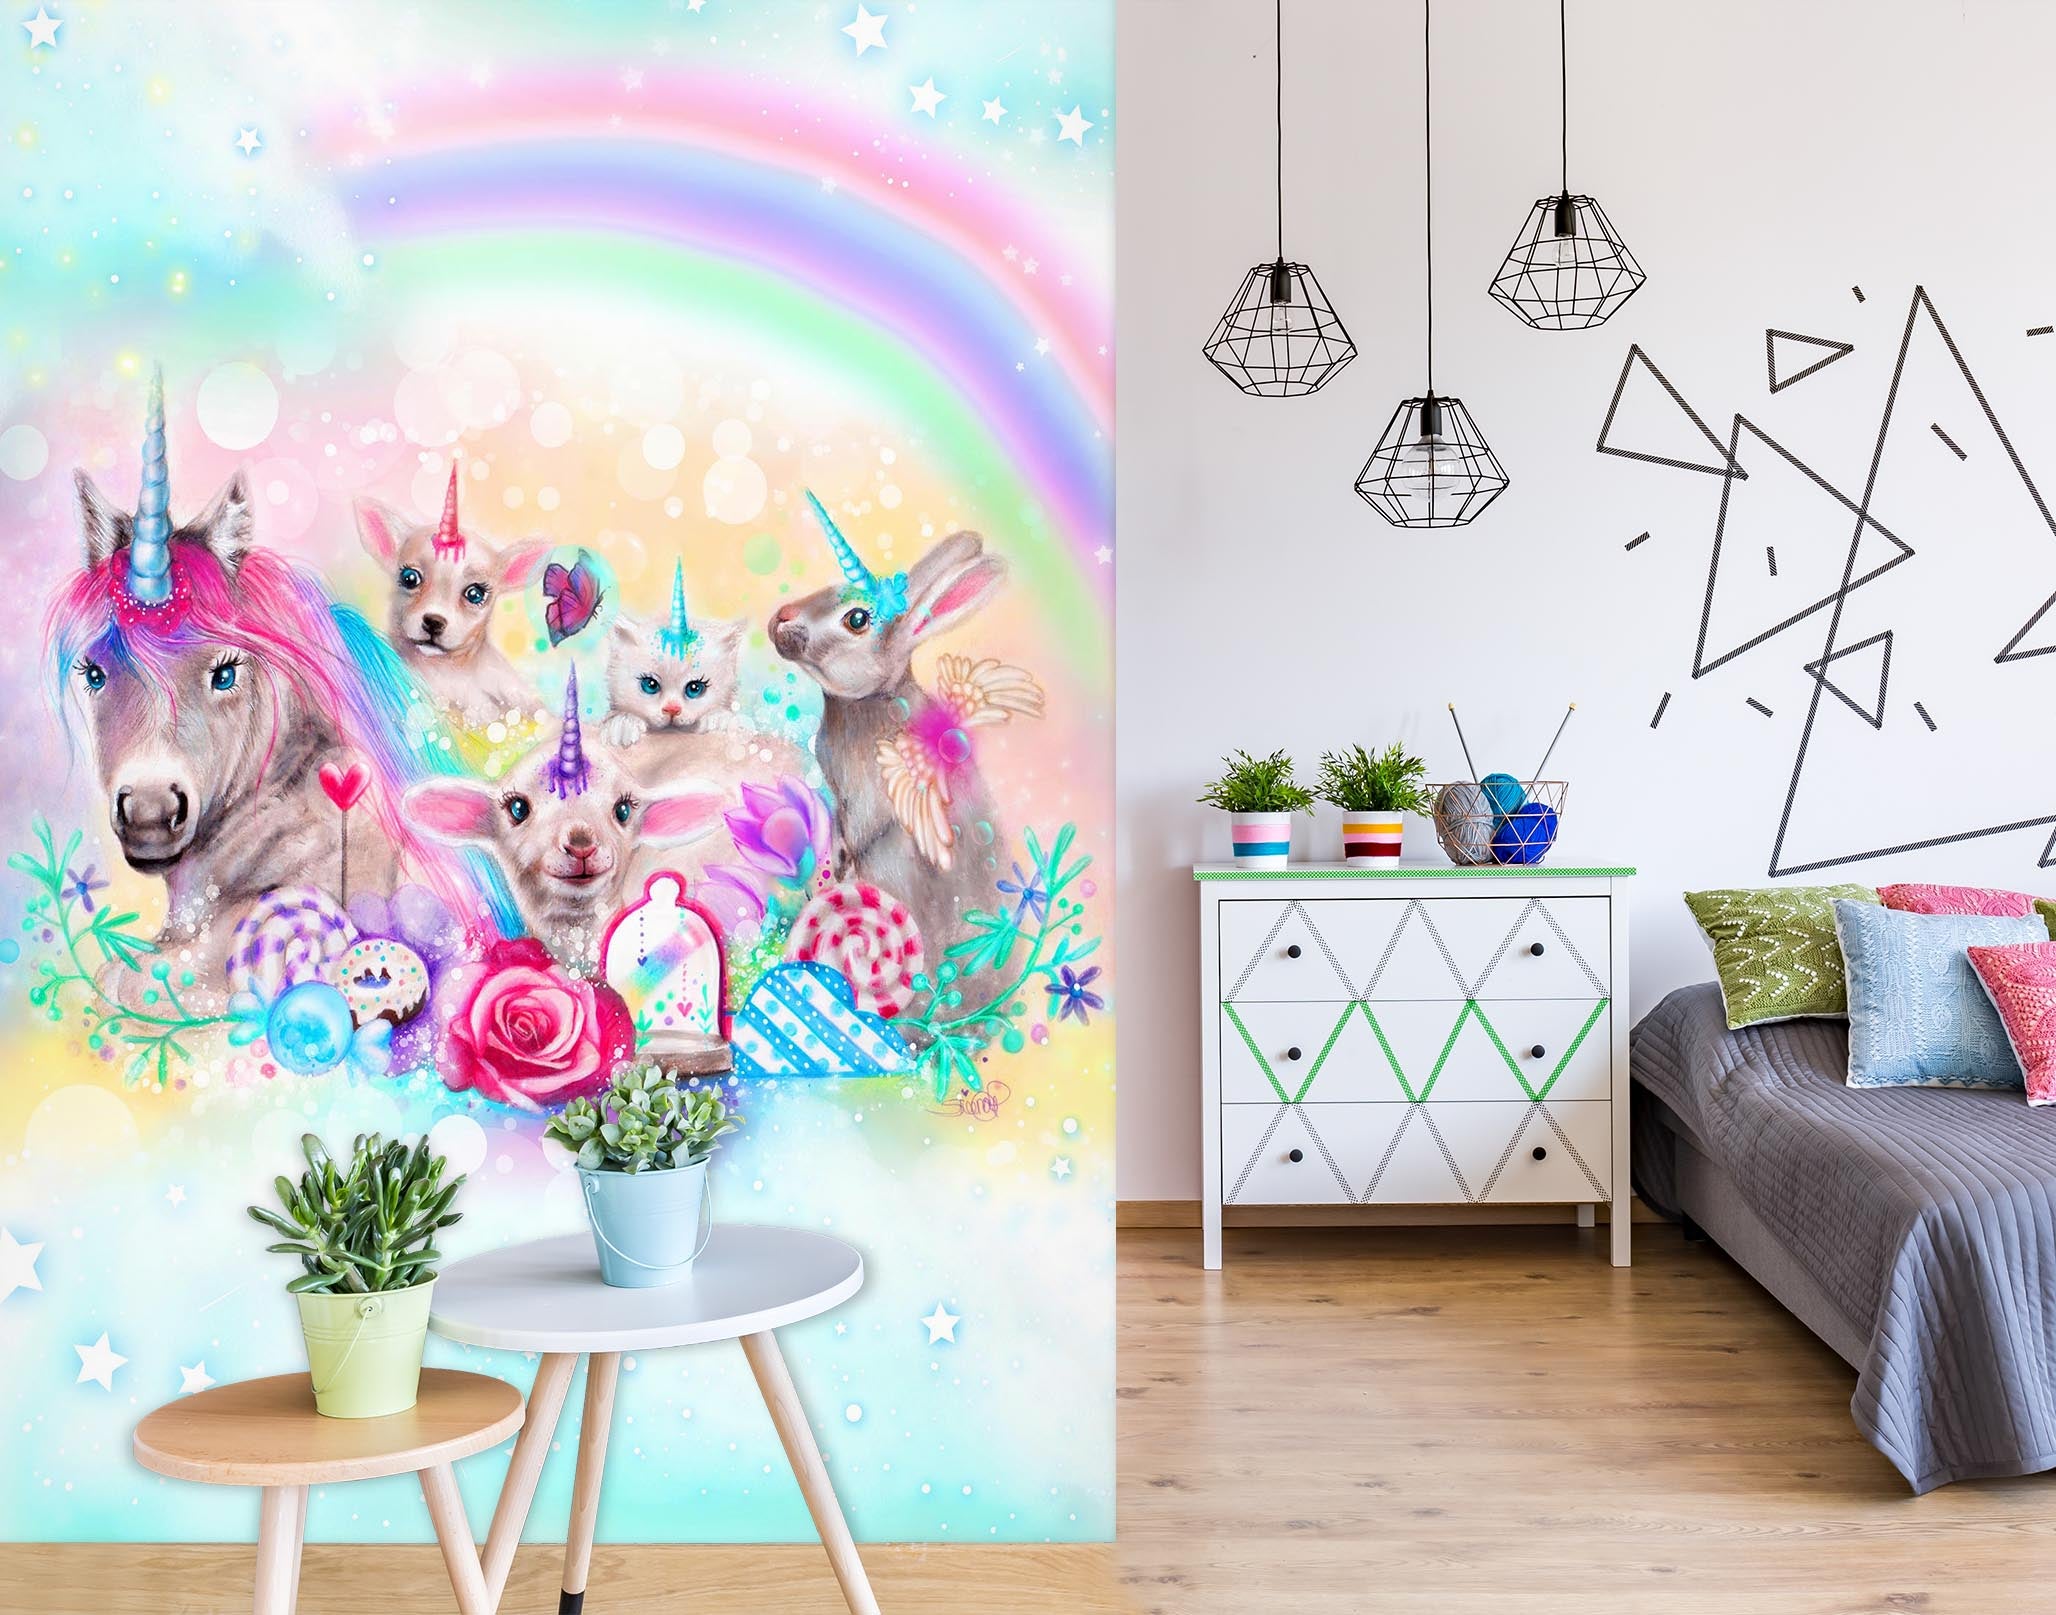 3D Rainbow Unicorn Bunny 8479 Sheena Pike Wall Mural Wall Murals